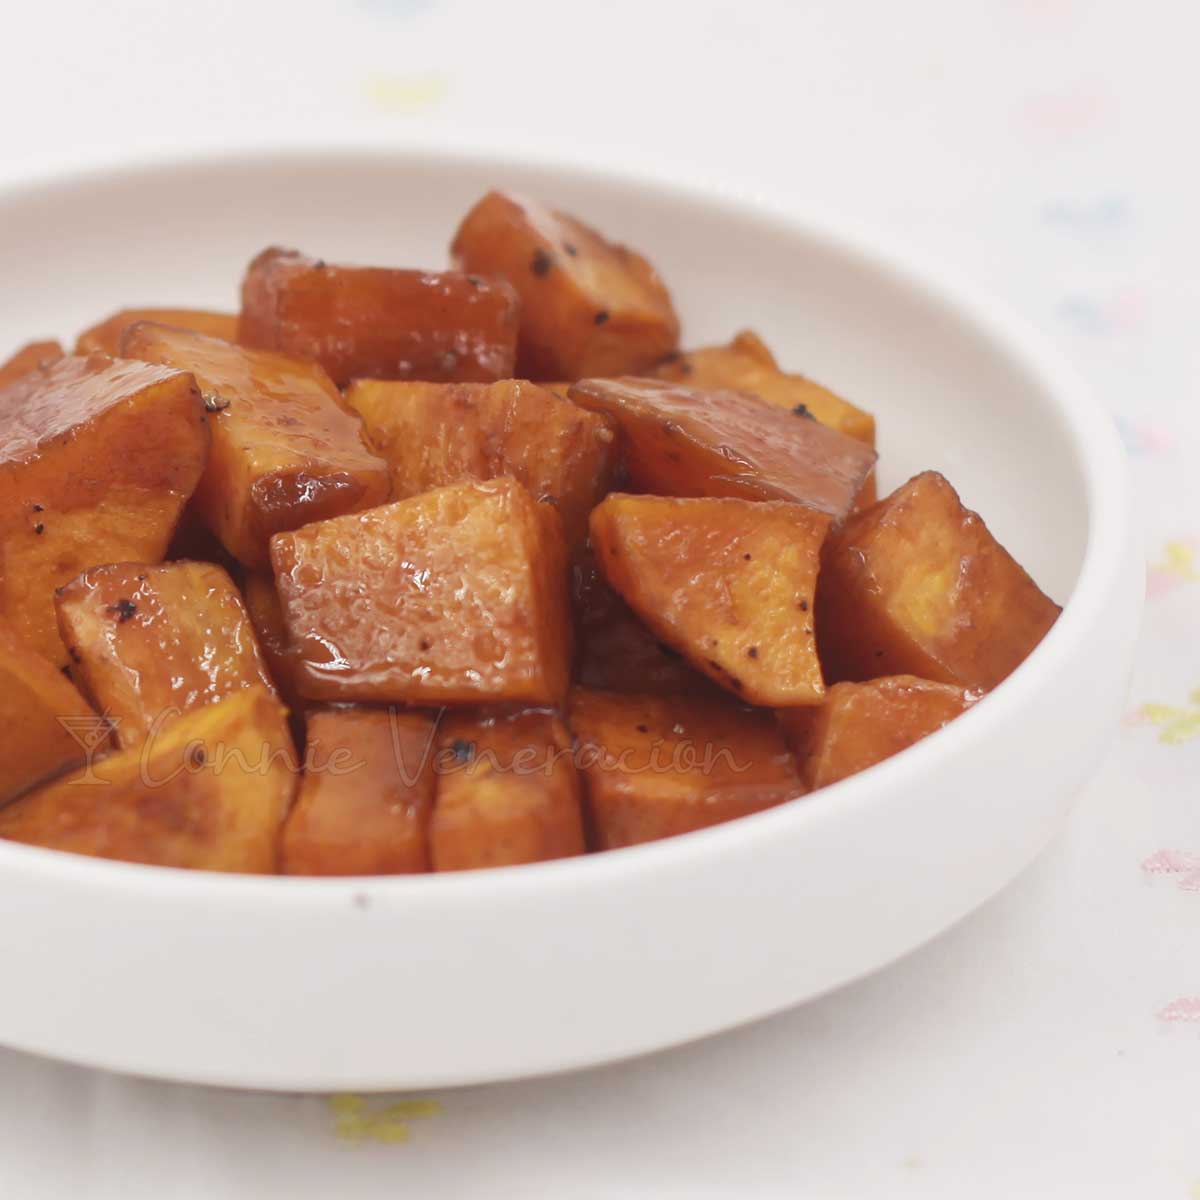 Baked brown sugar-glazed sweet potatoes